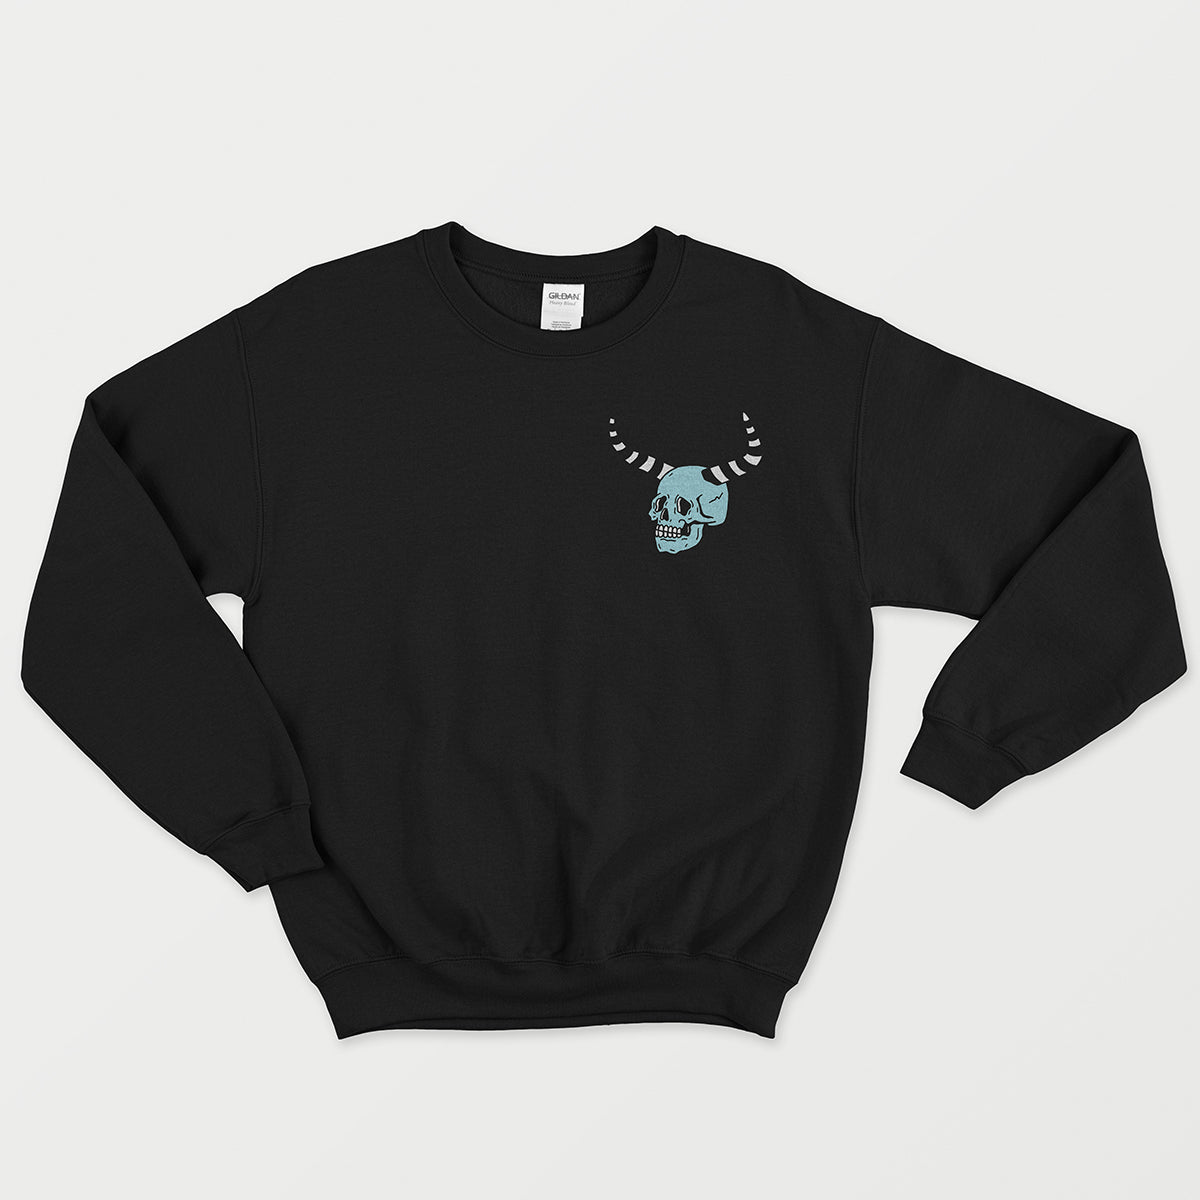 Single Zodiac Personalized Crewneck Sweatshirt